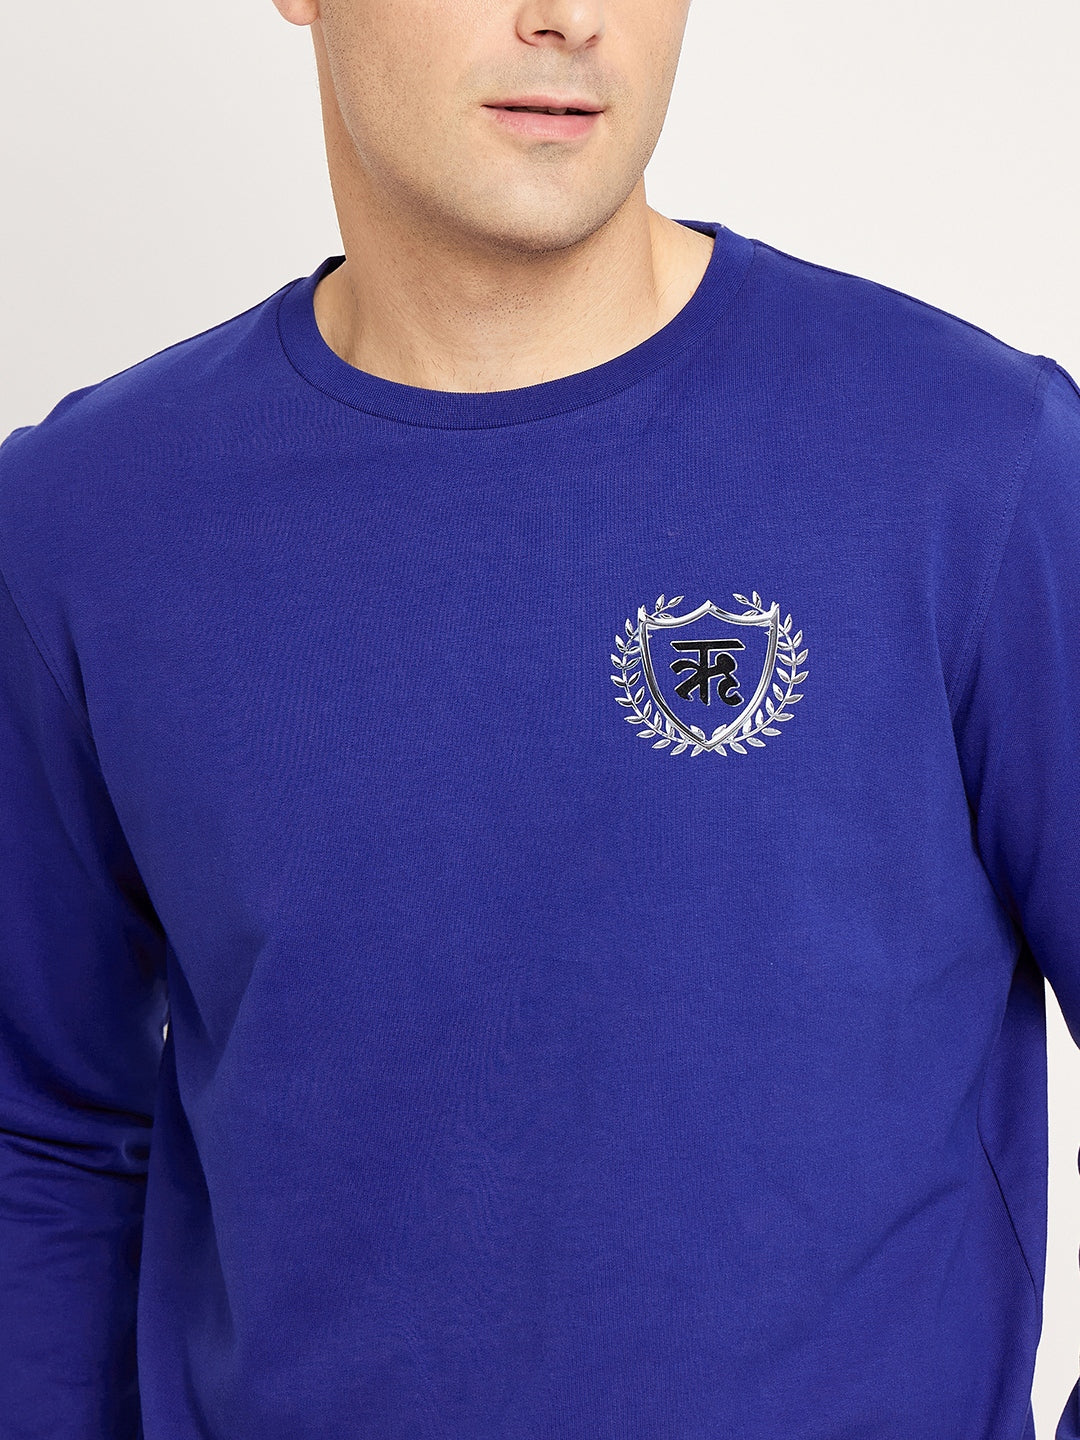 Lively Blue Sweatshirt with Radiant Crest Design